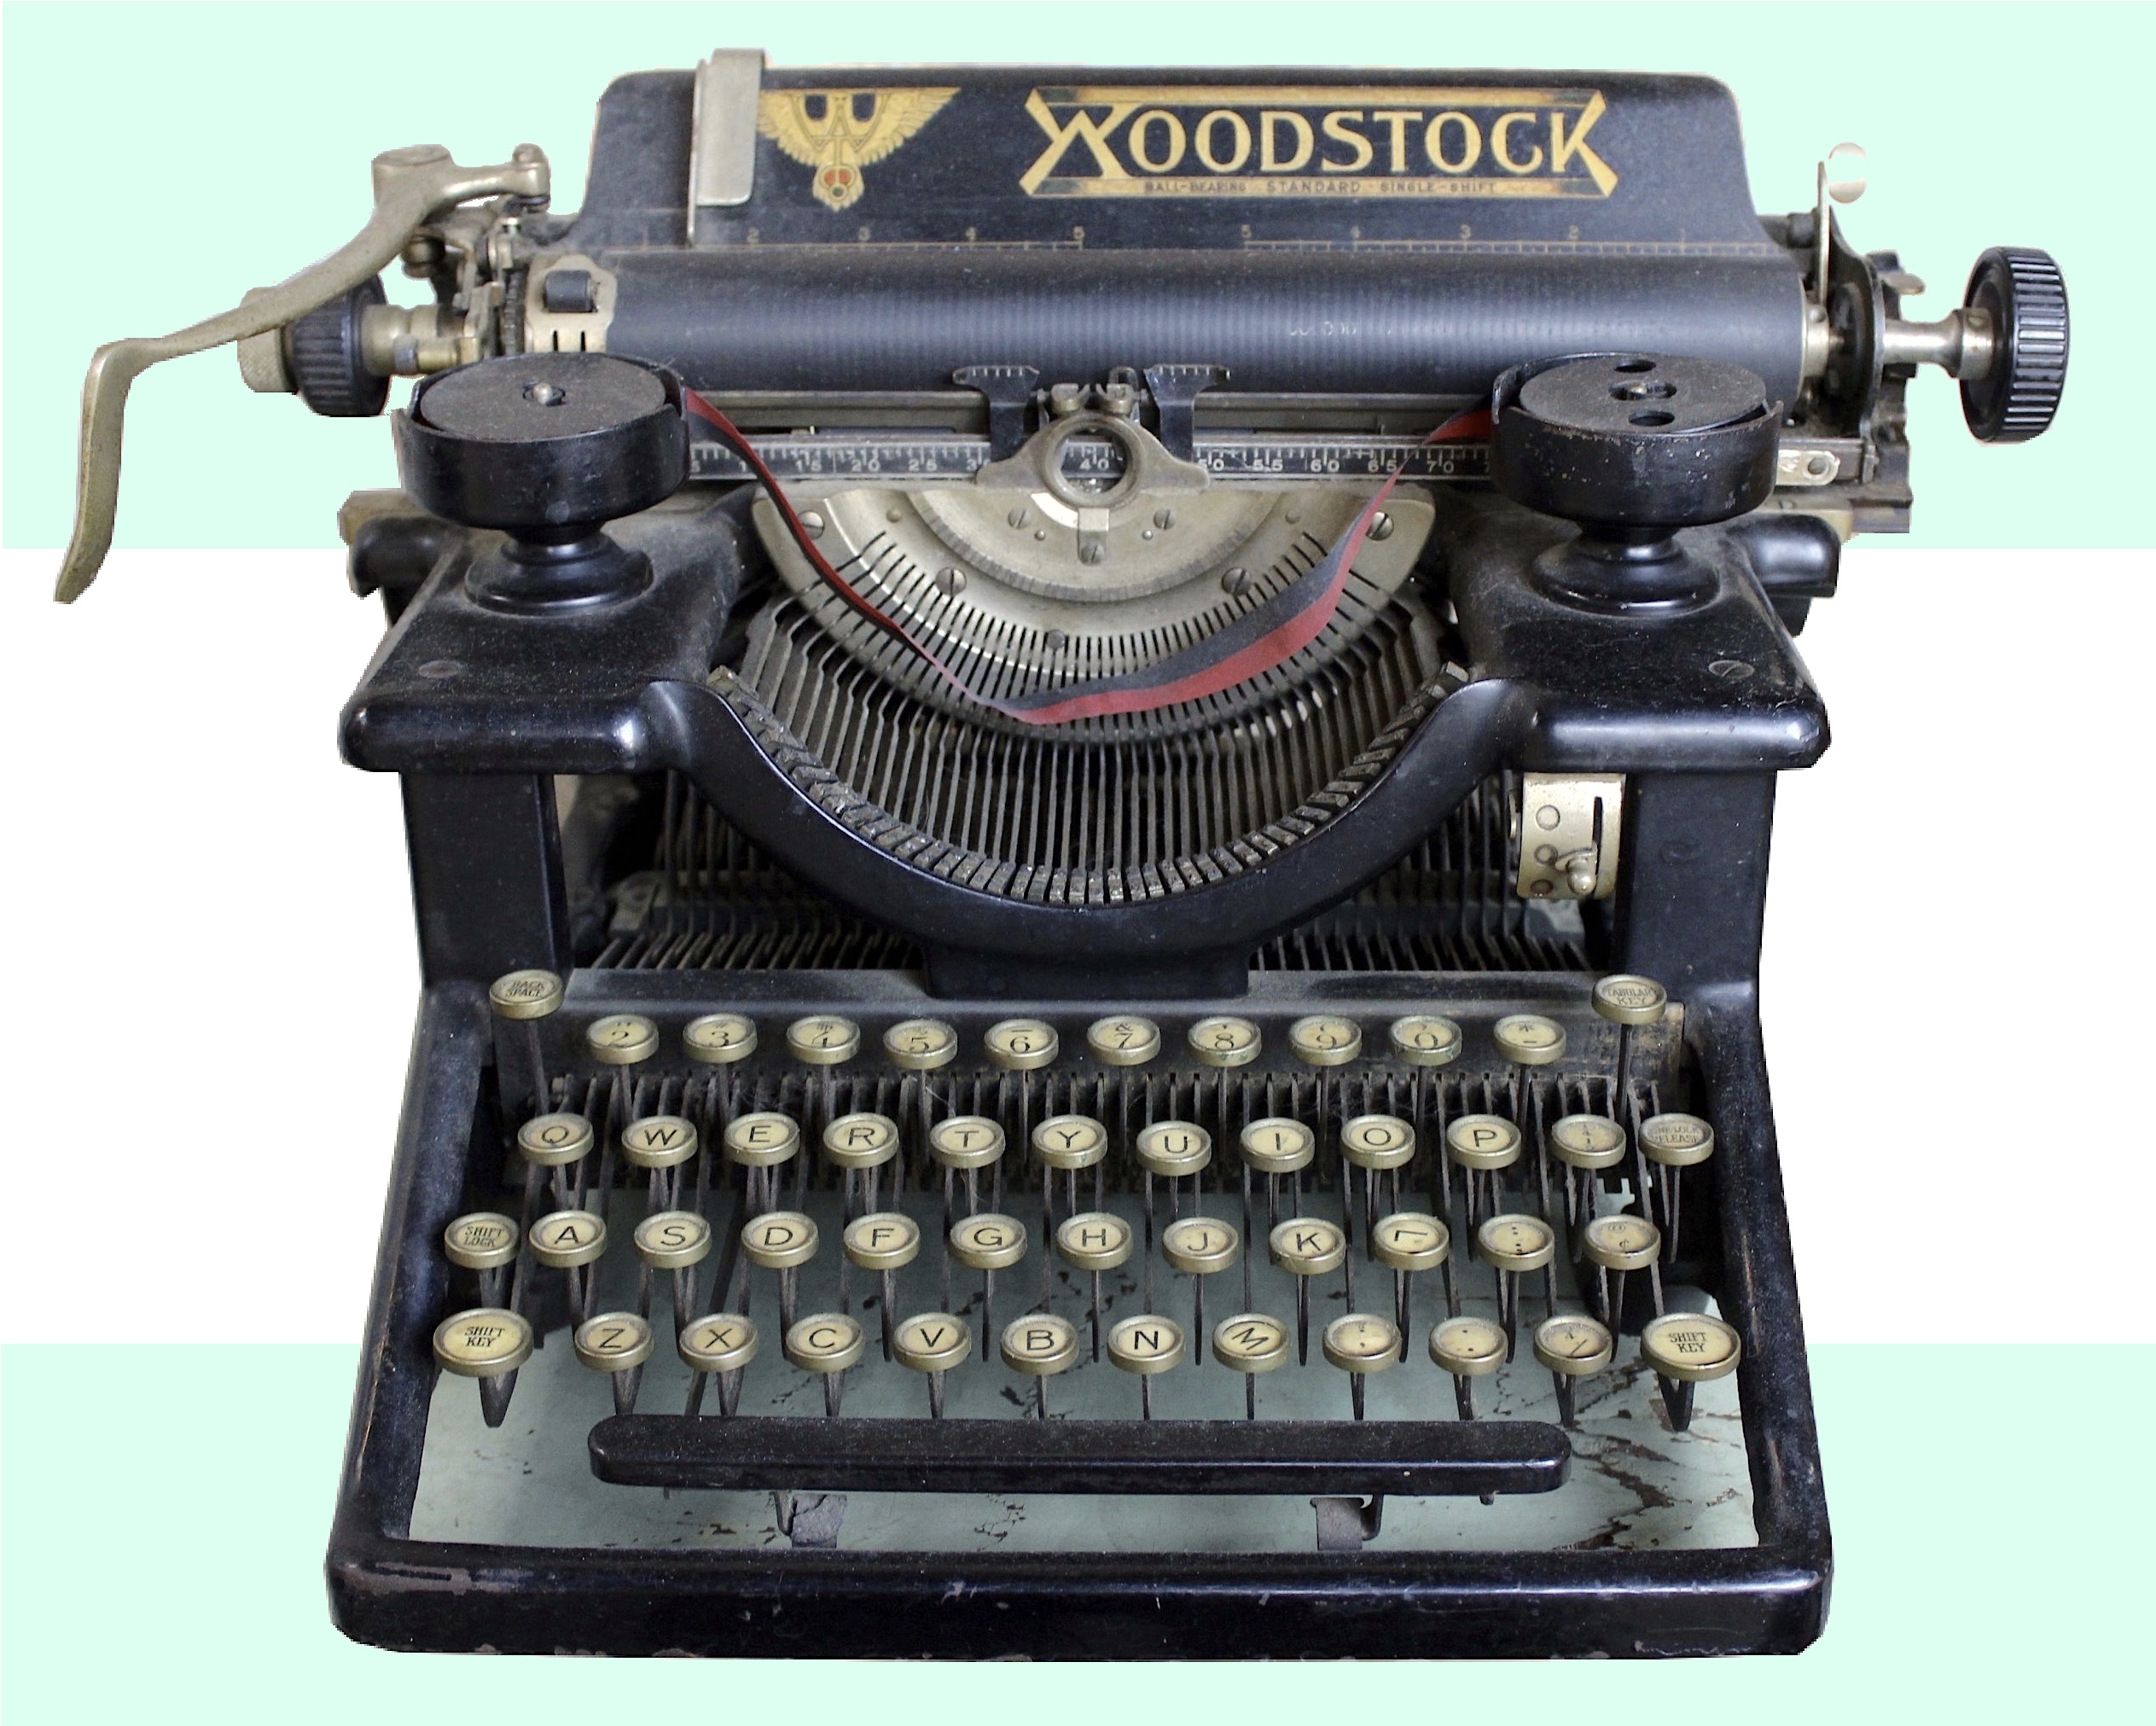 Woodstock Typewriter history